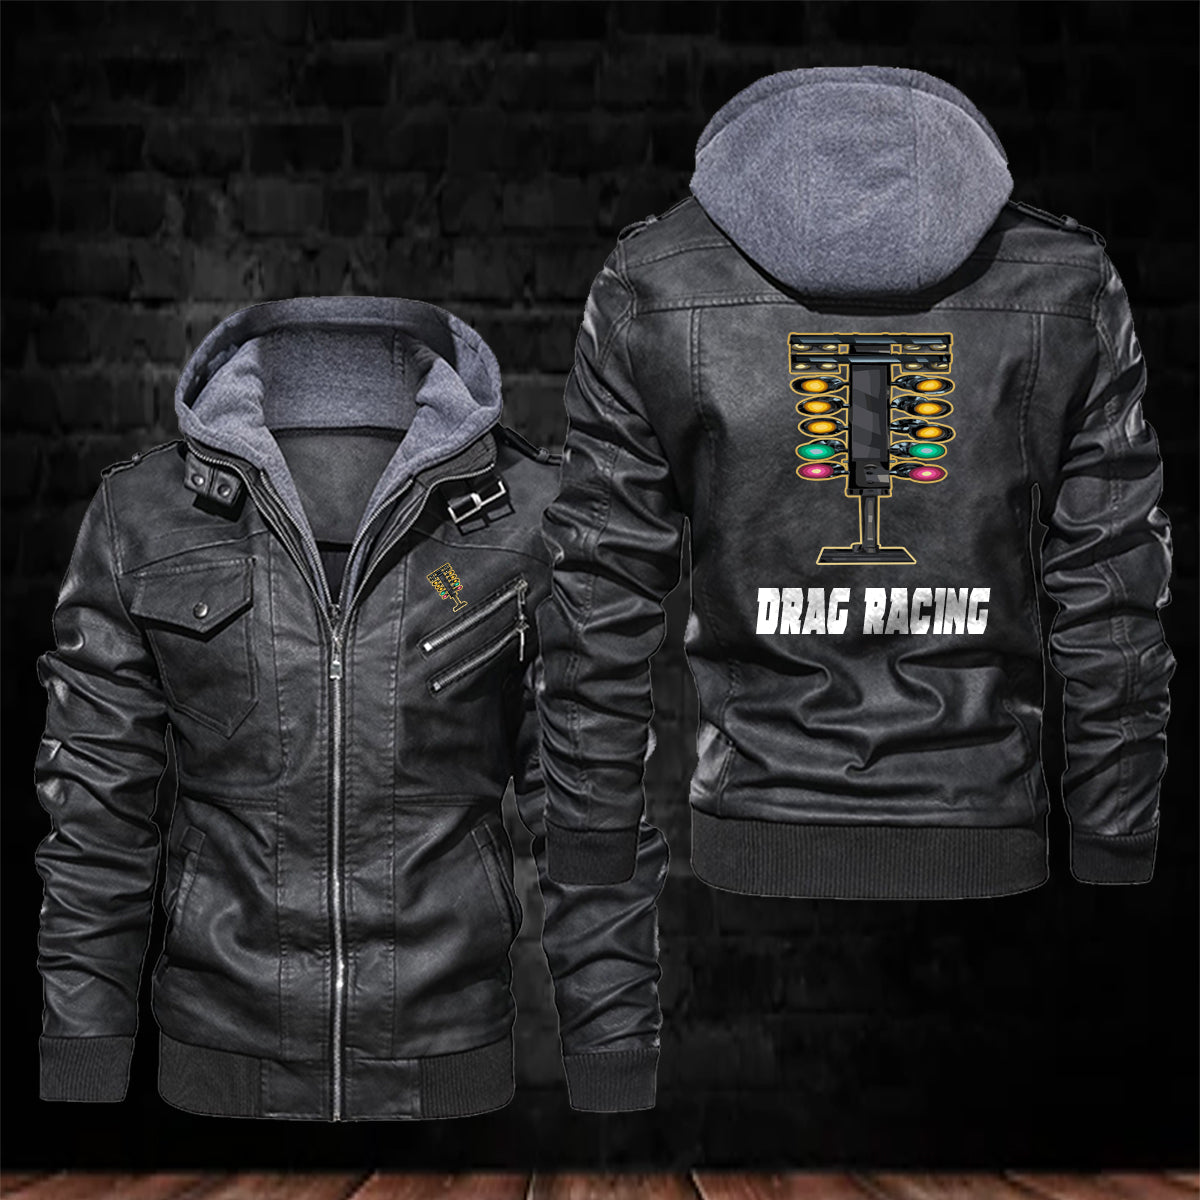 Drag Racing leather jacket